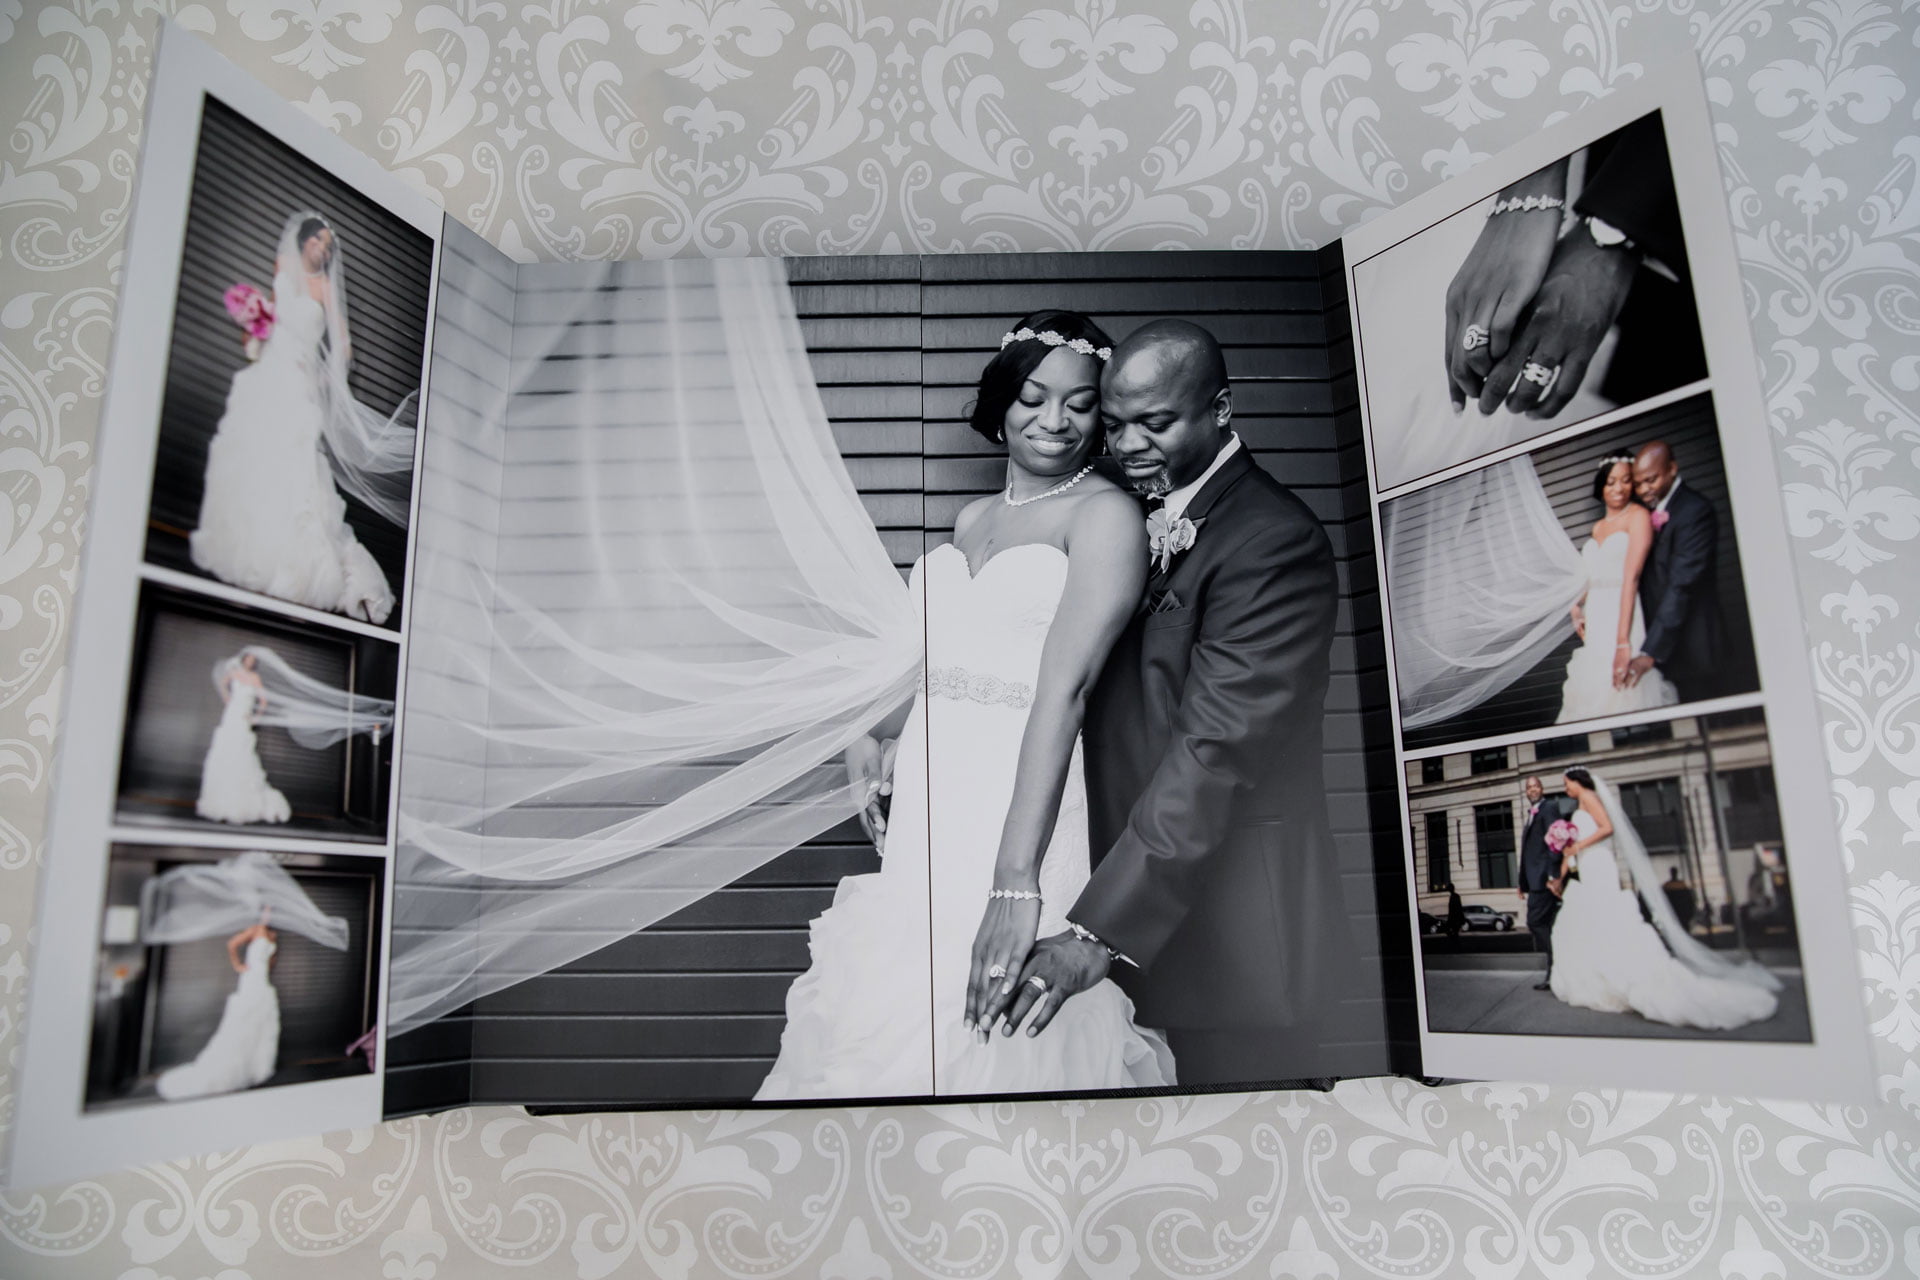 Photo Album Design Services for Wedding Photographers